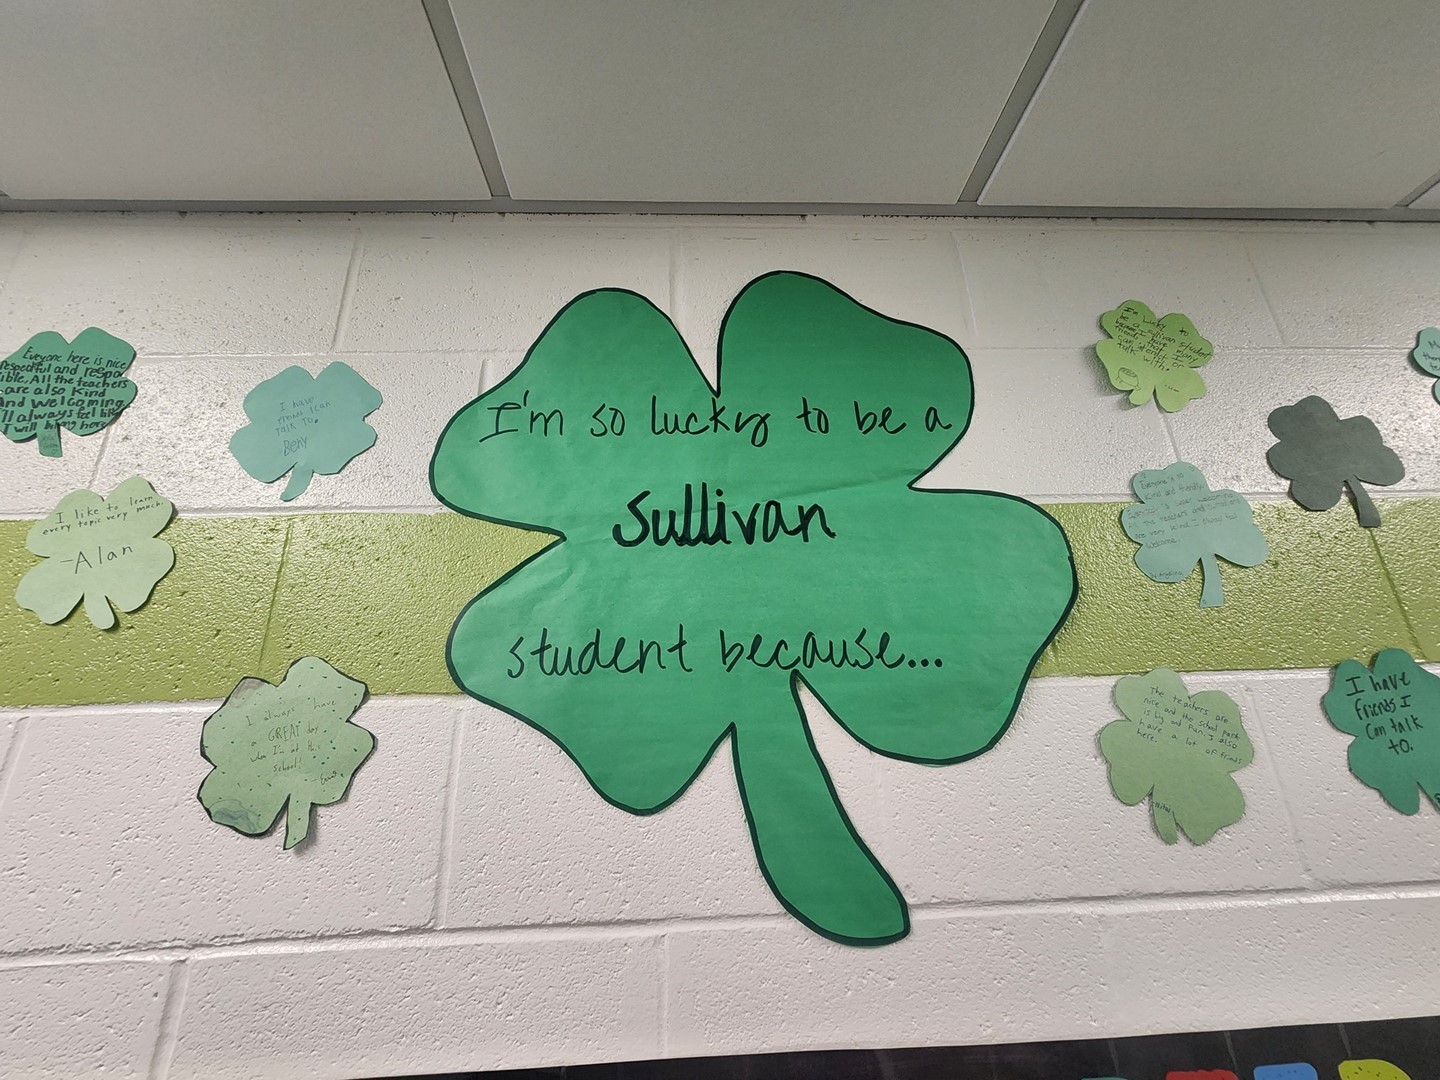 Sullivan students share their luck!